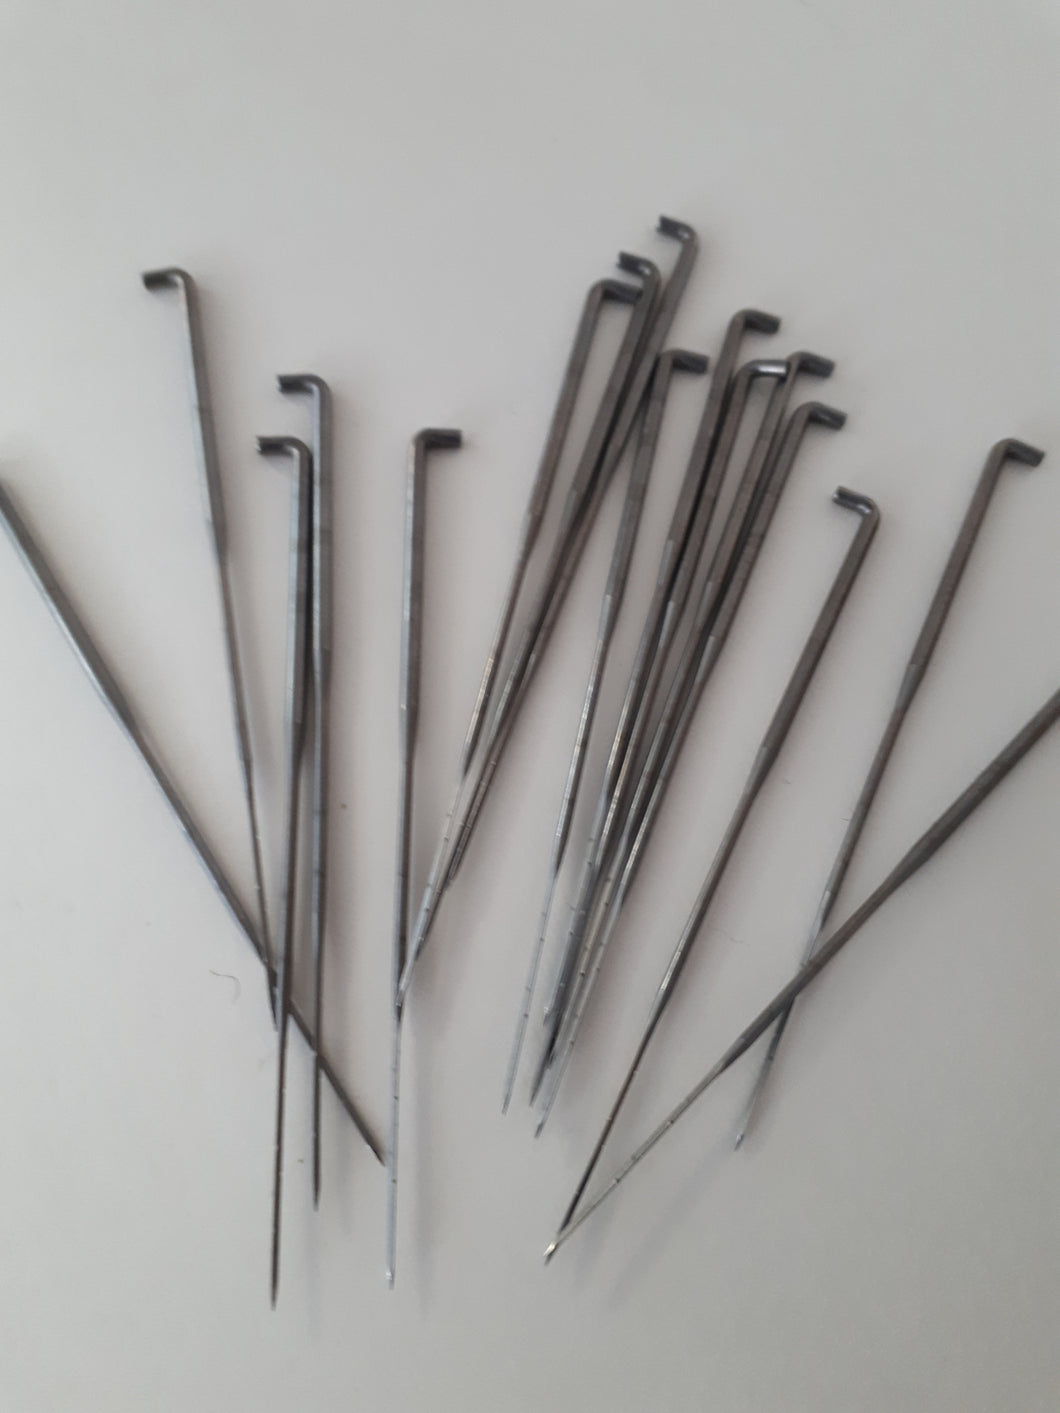 felting needles - tool